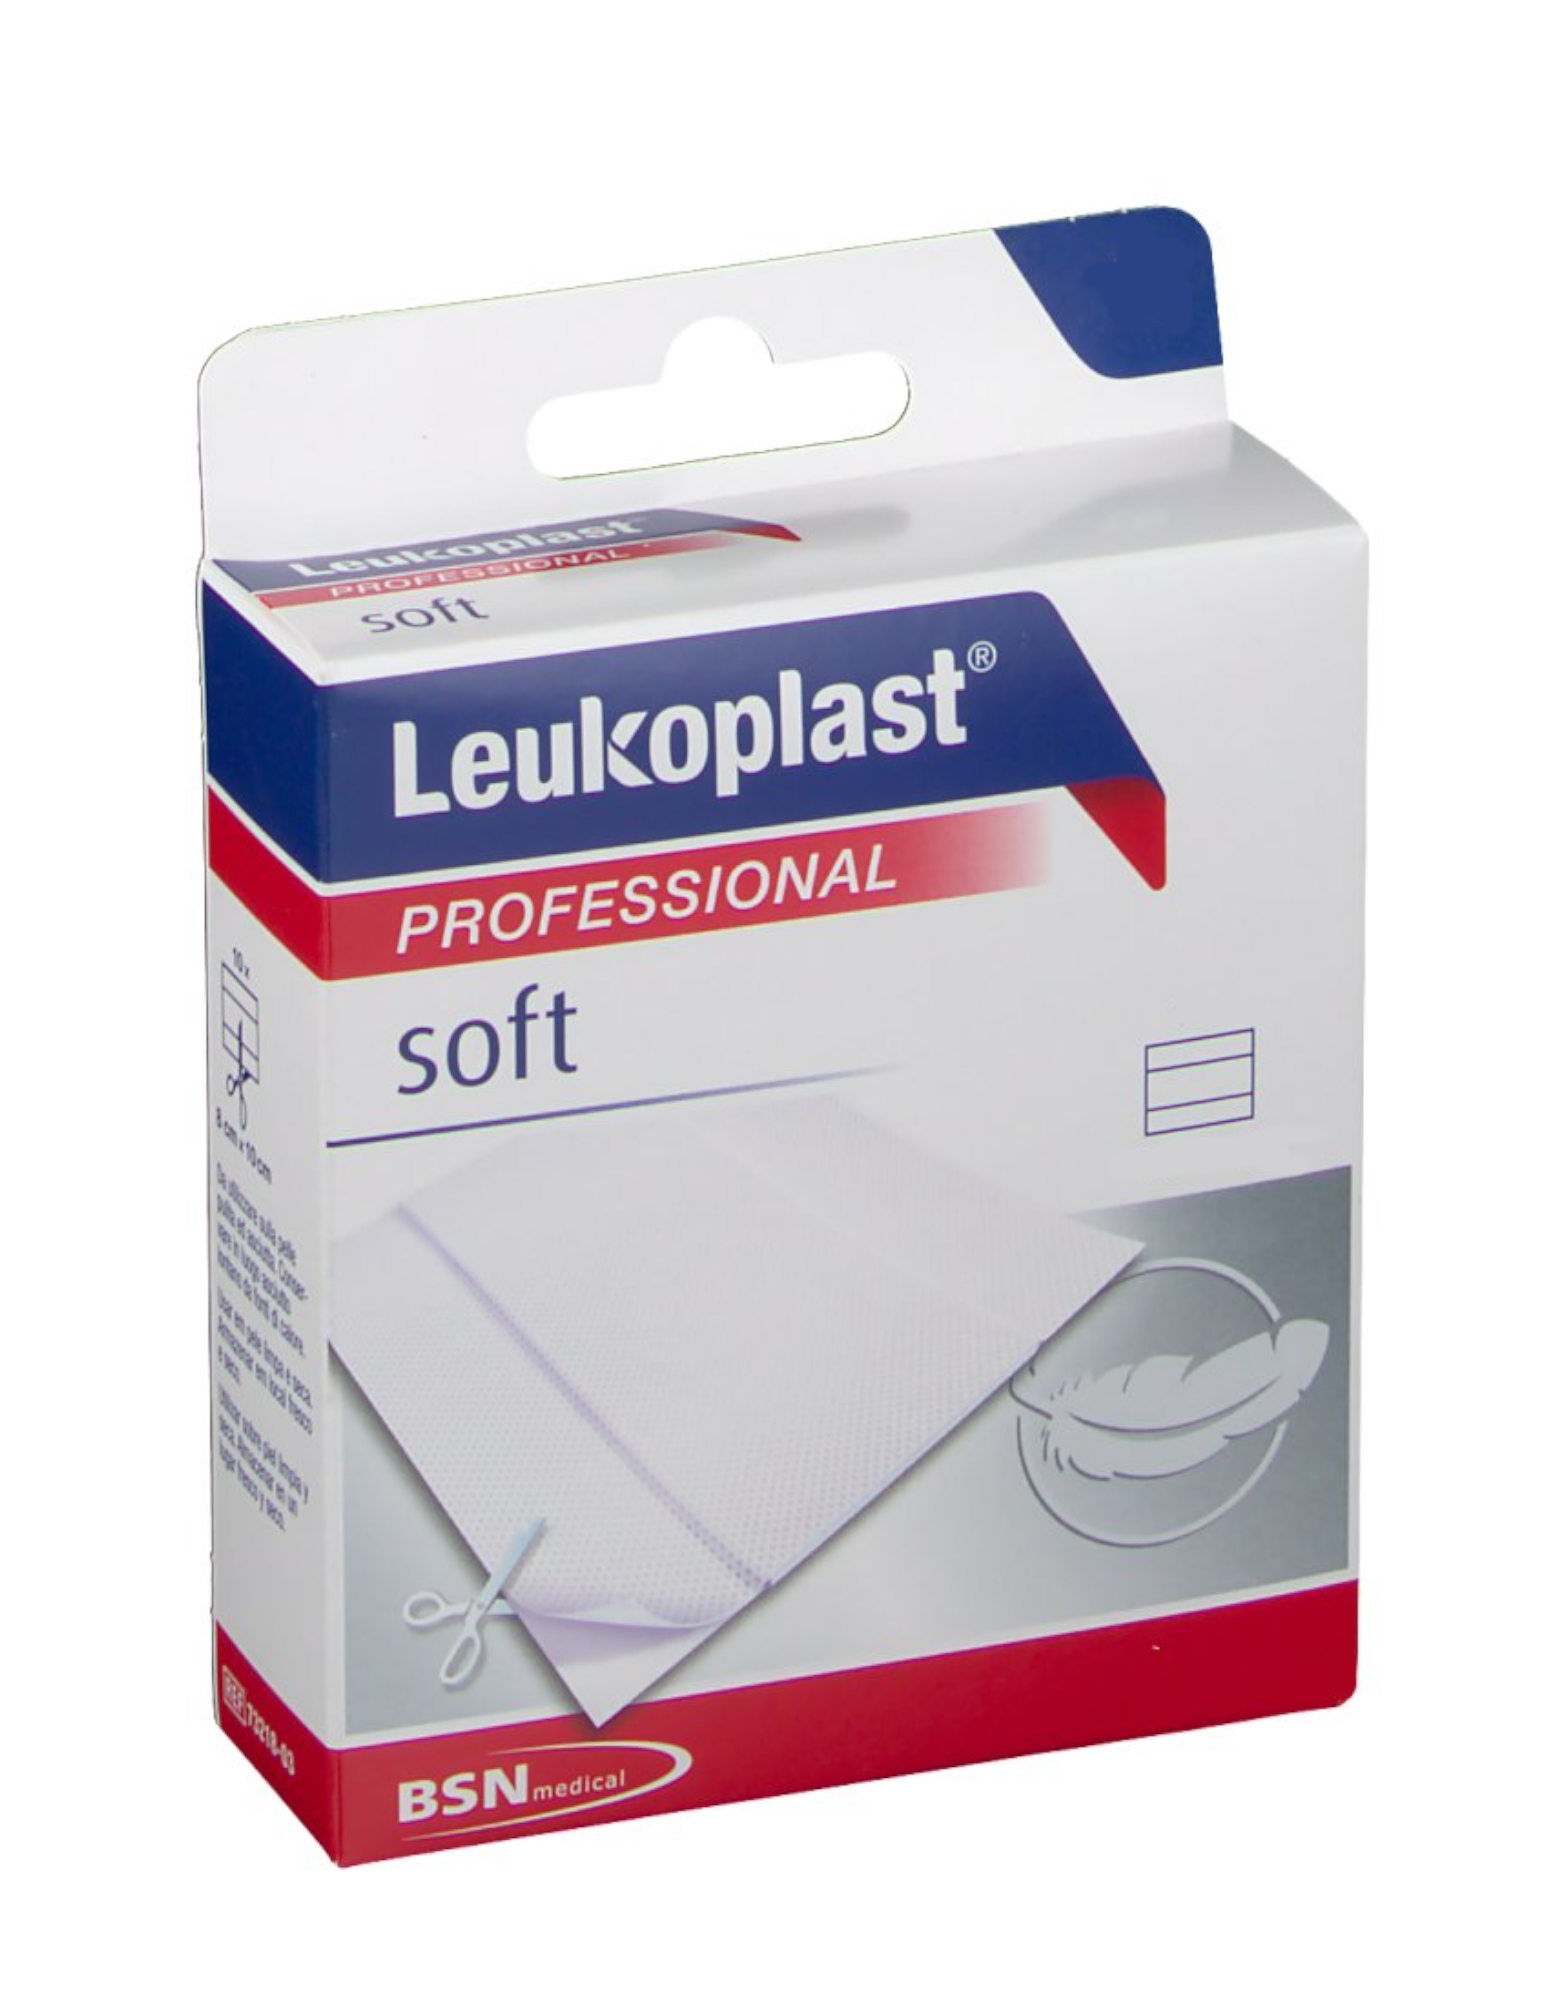 BSN MEDICAL Leukoplast - Soft 1 Cerotto